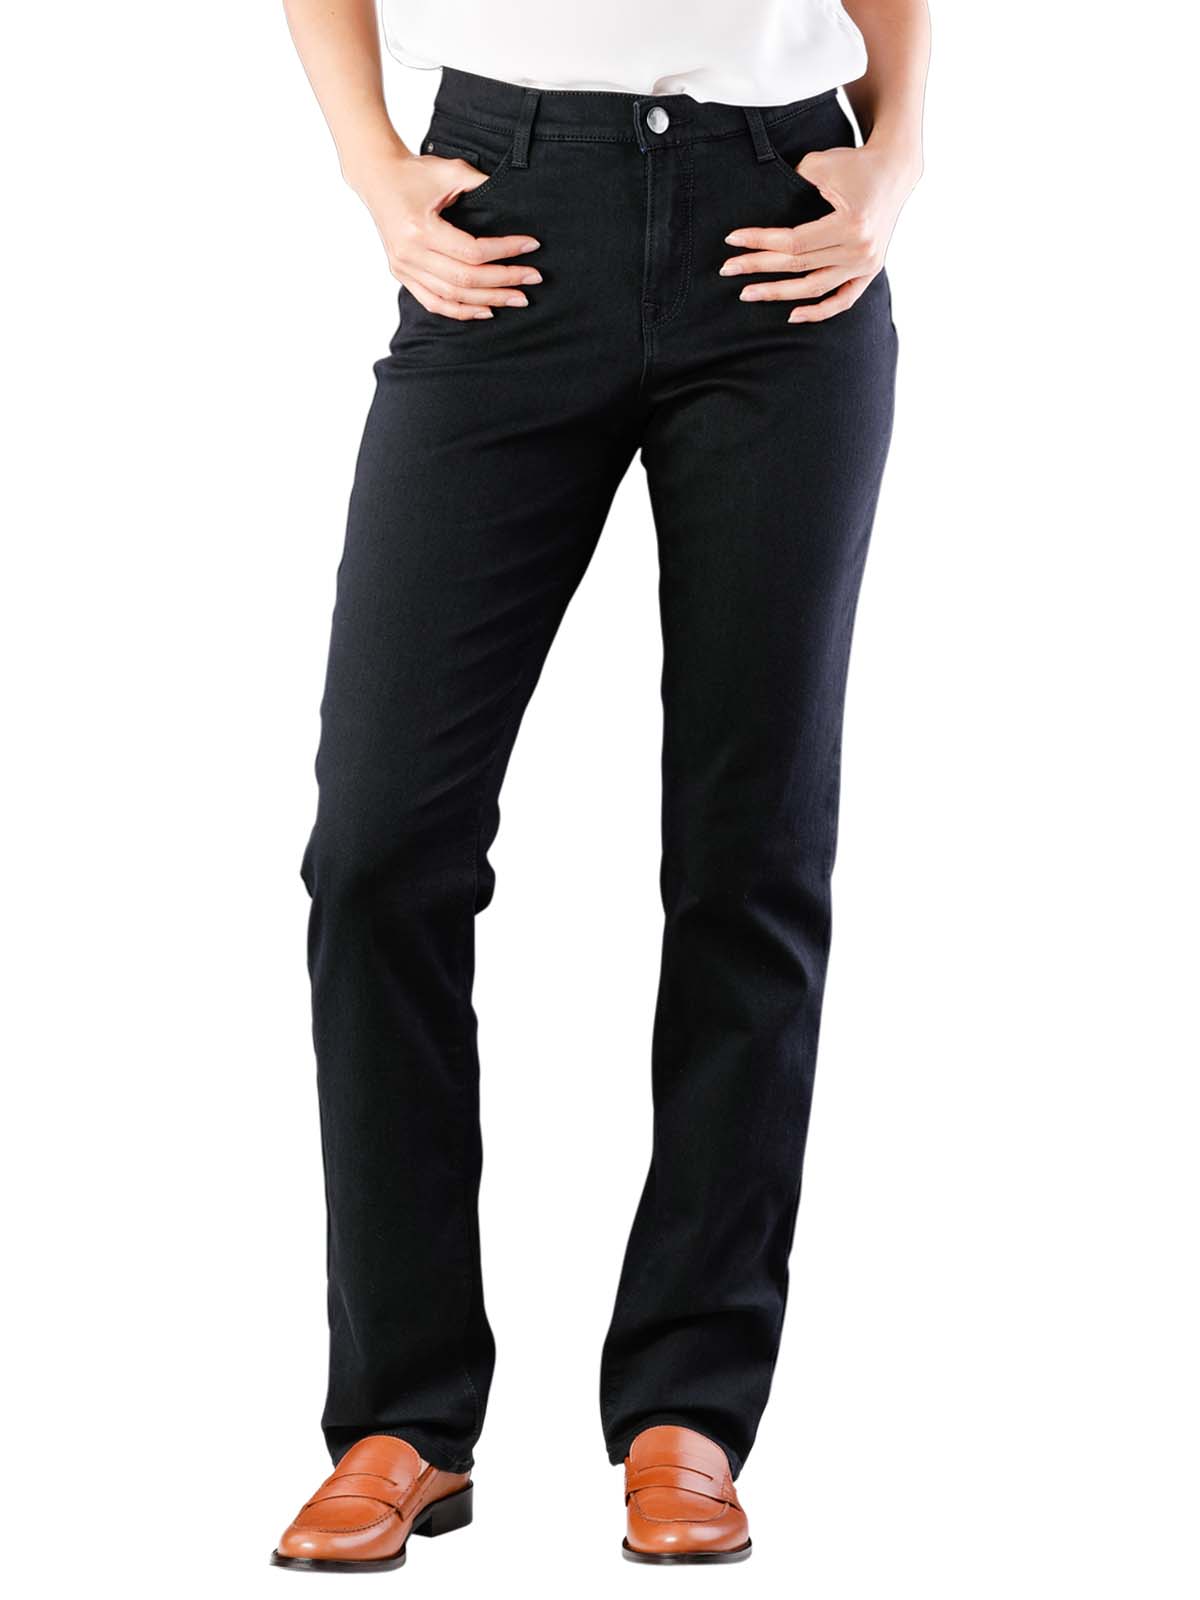 Reserveren Gedragen calorie Brax Carola Jeans clean black Brax Women's Jeans | Free Shipping on  BEBASIC.CH - SIMPLY LOOK GOOD